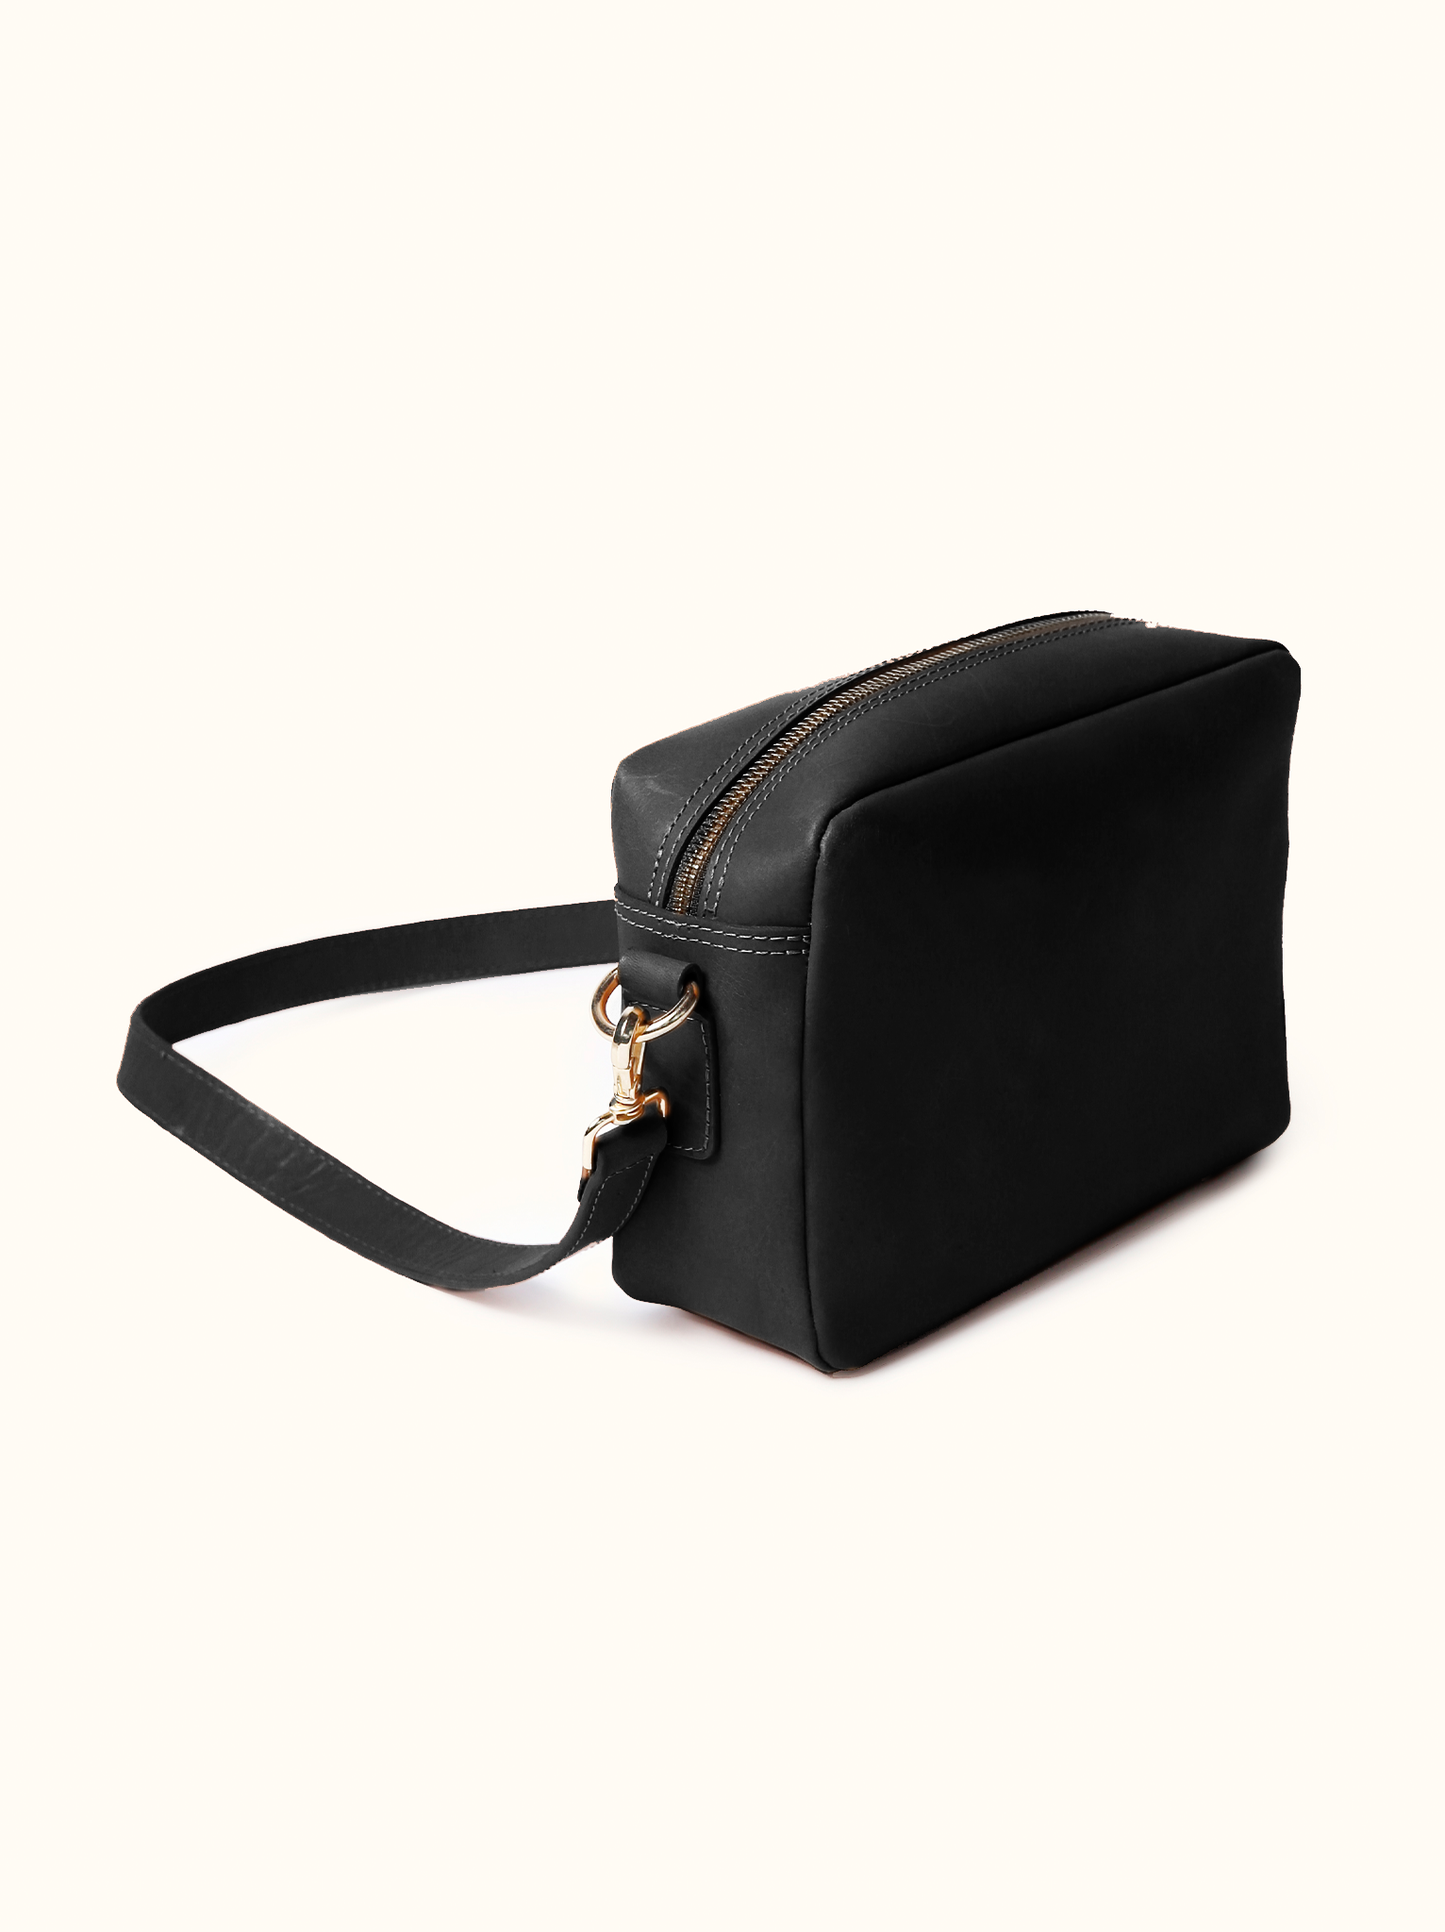 ABLE Aurora Crossbody-handbags-lou lou boutiques